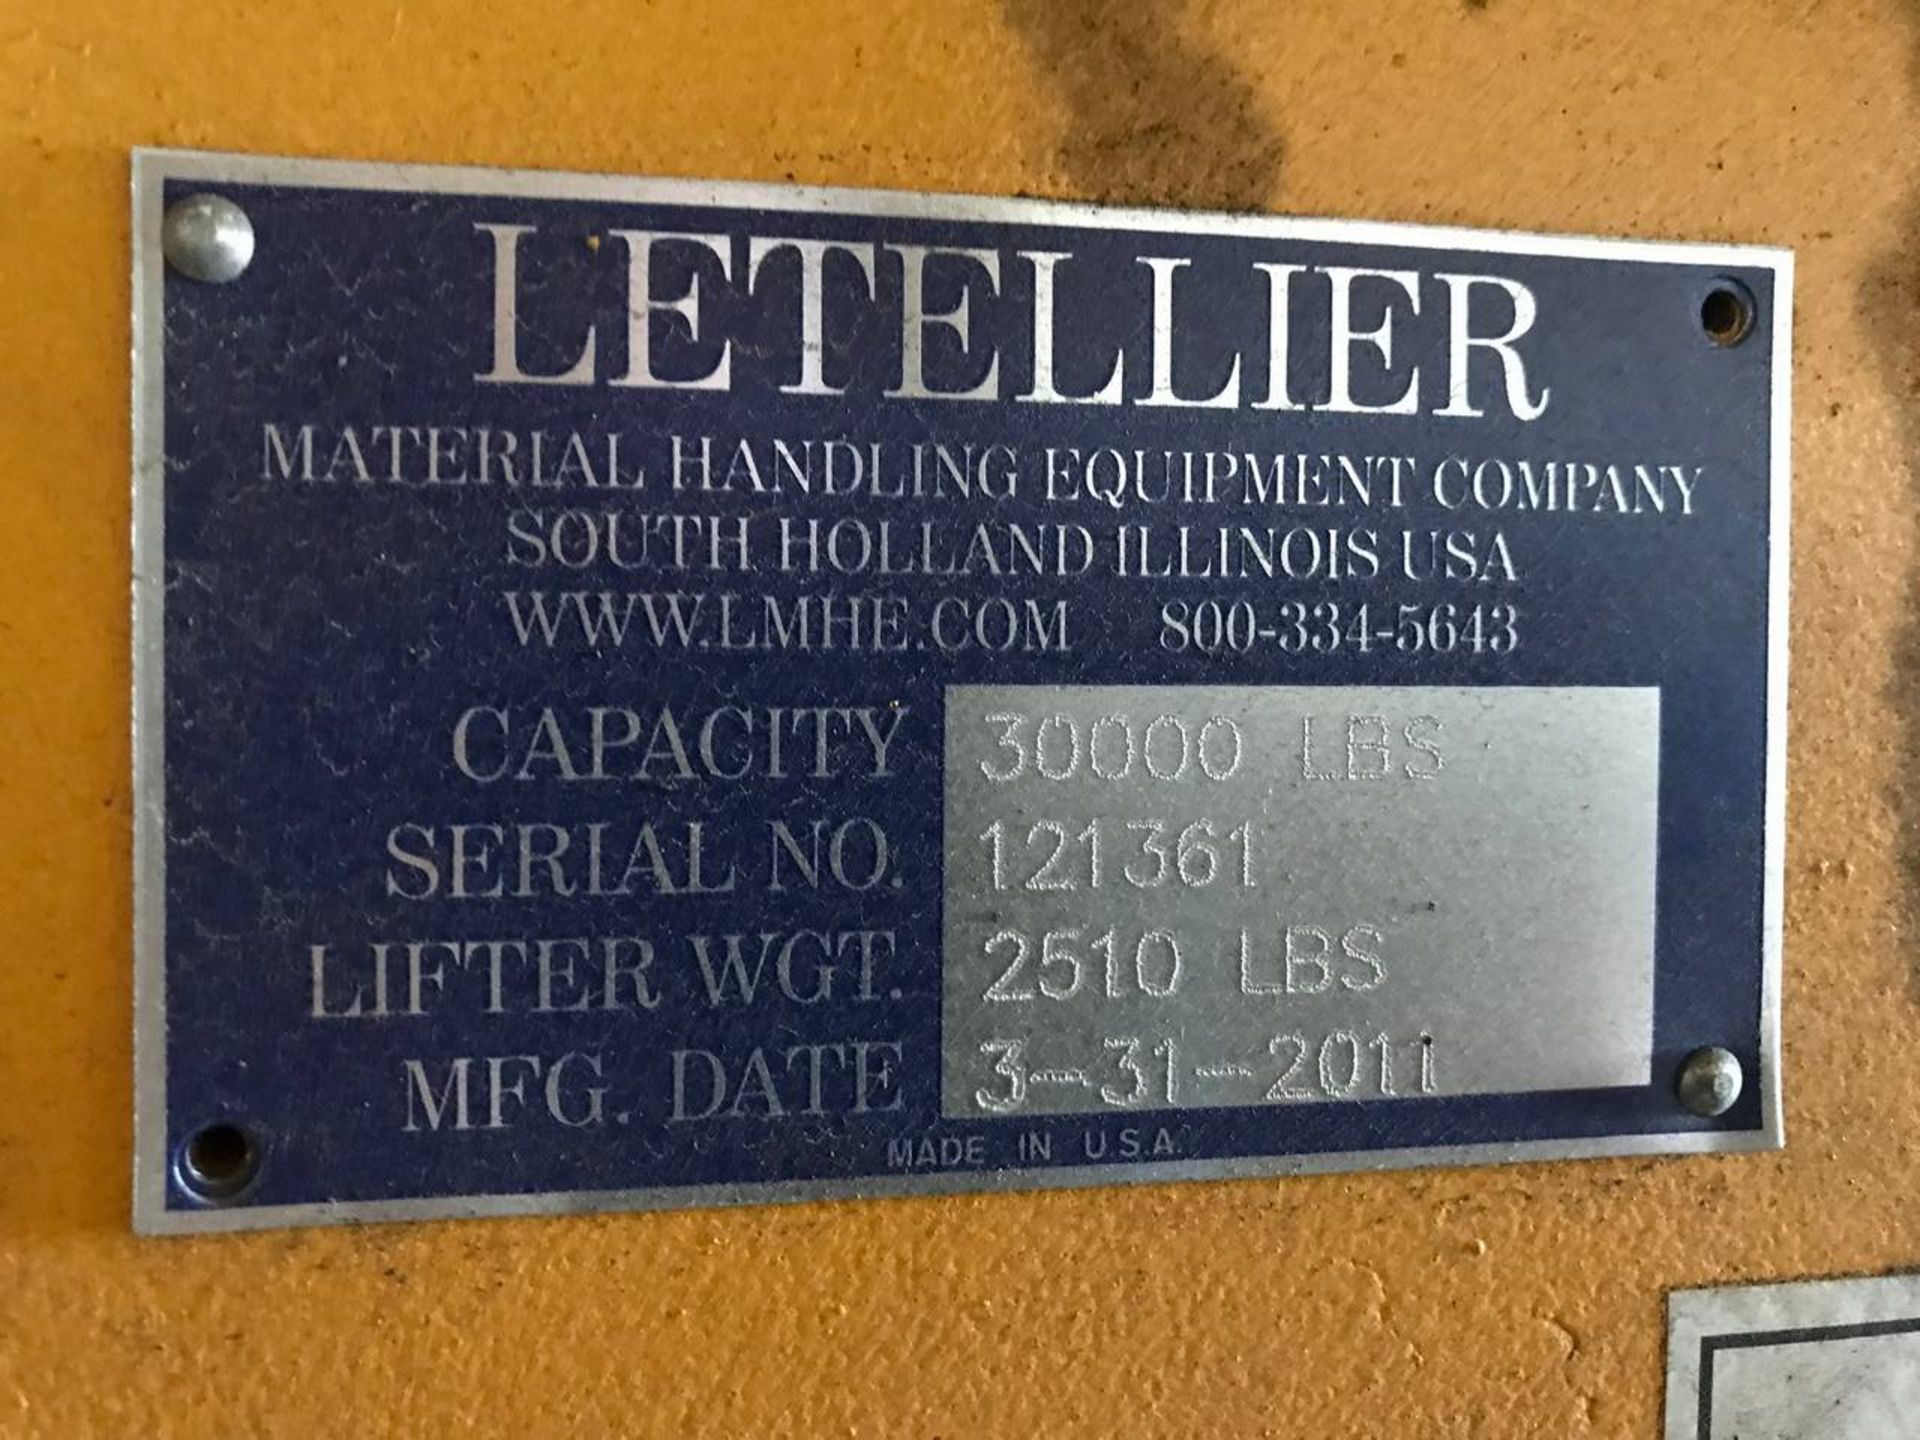 2011 Letellier 30,000 Lb Capacity x 20'6" Spreader Bar - Image 7 of 9